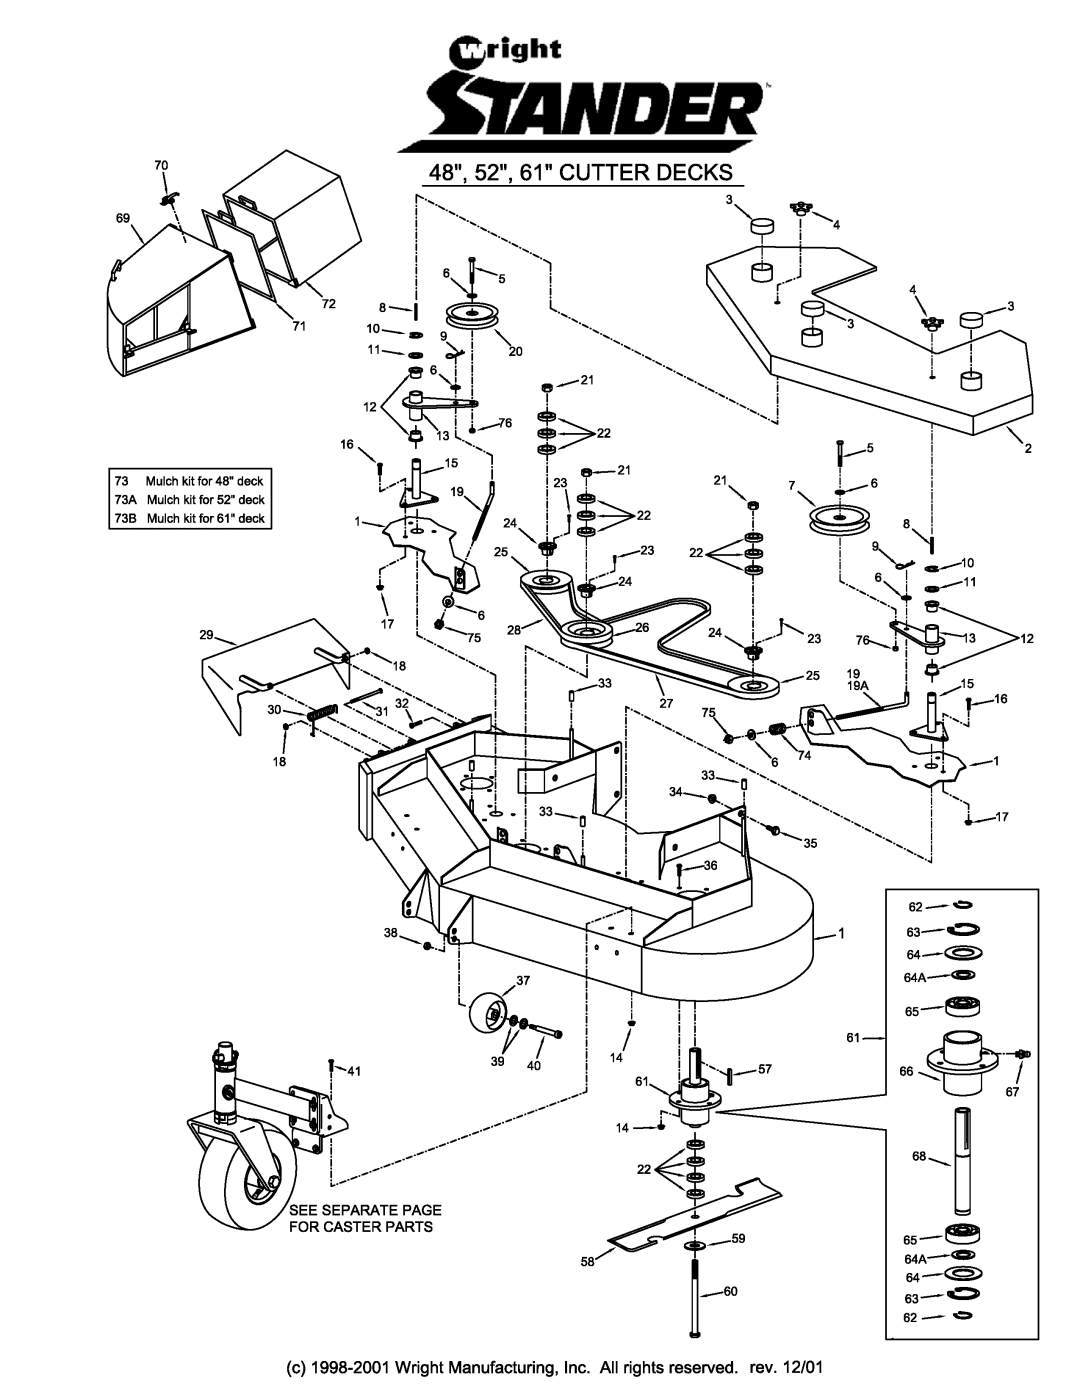 Wright Manufacturing 52, 61, 48 manual 